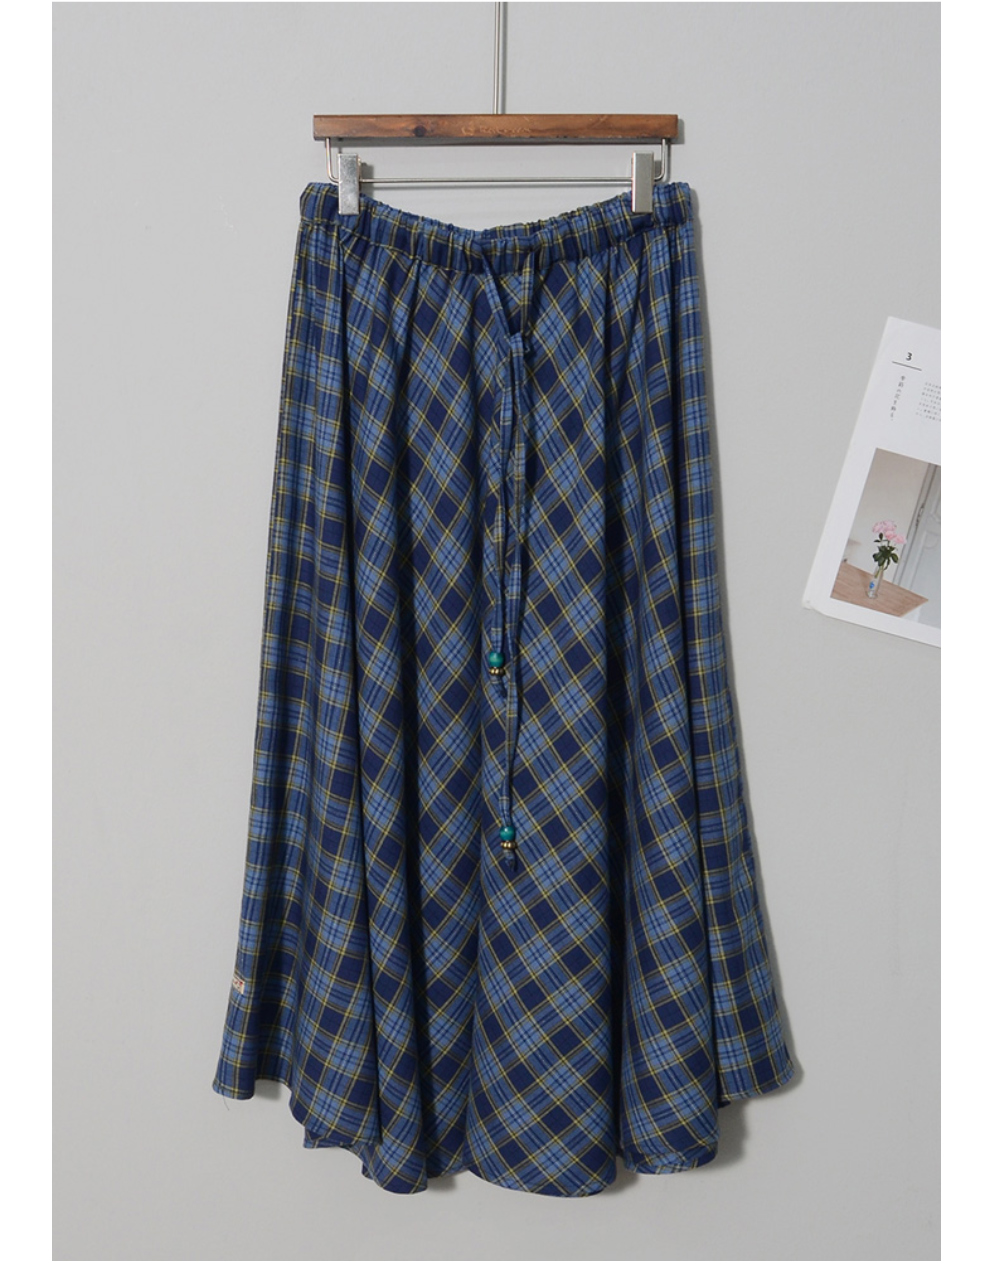 long skirt navy blue color image-S1L43